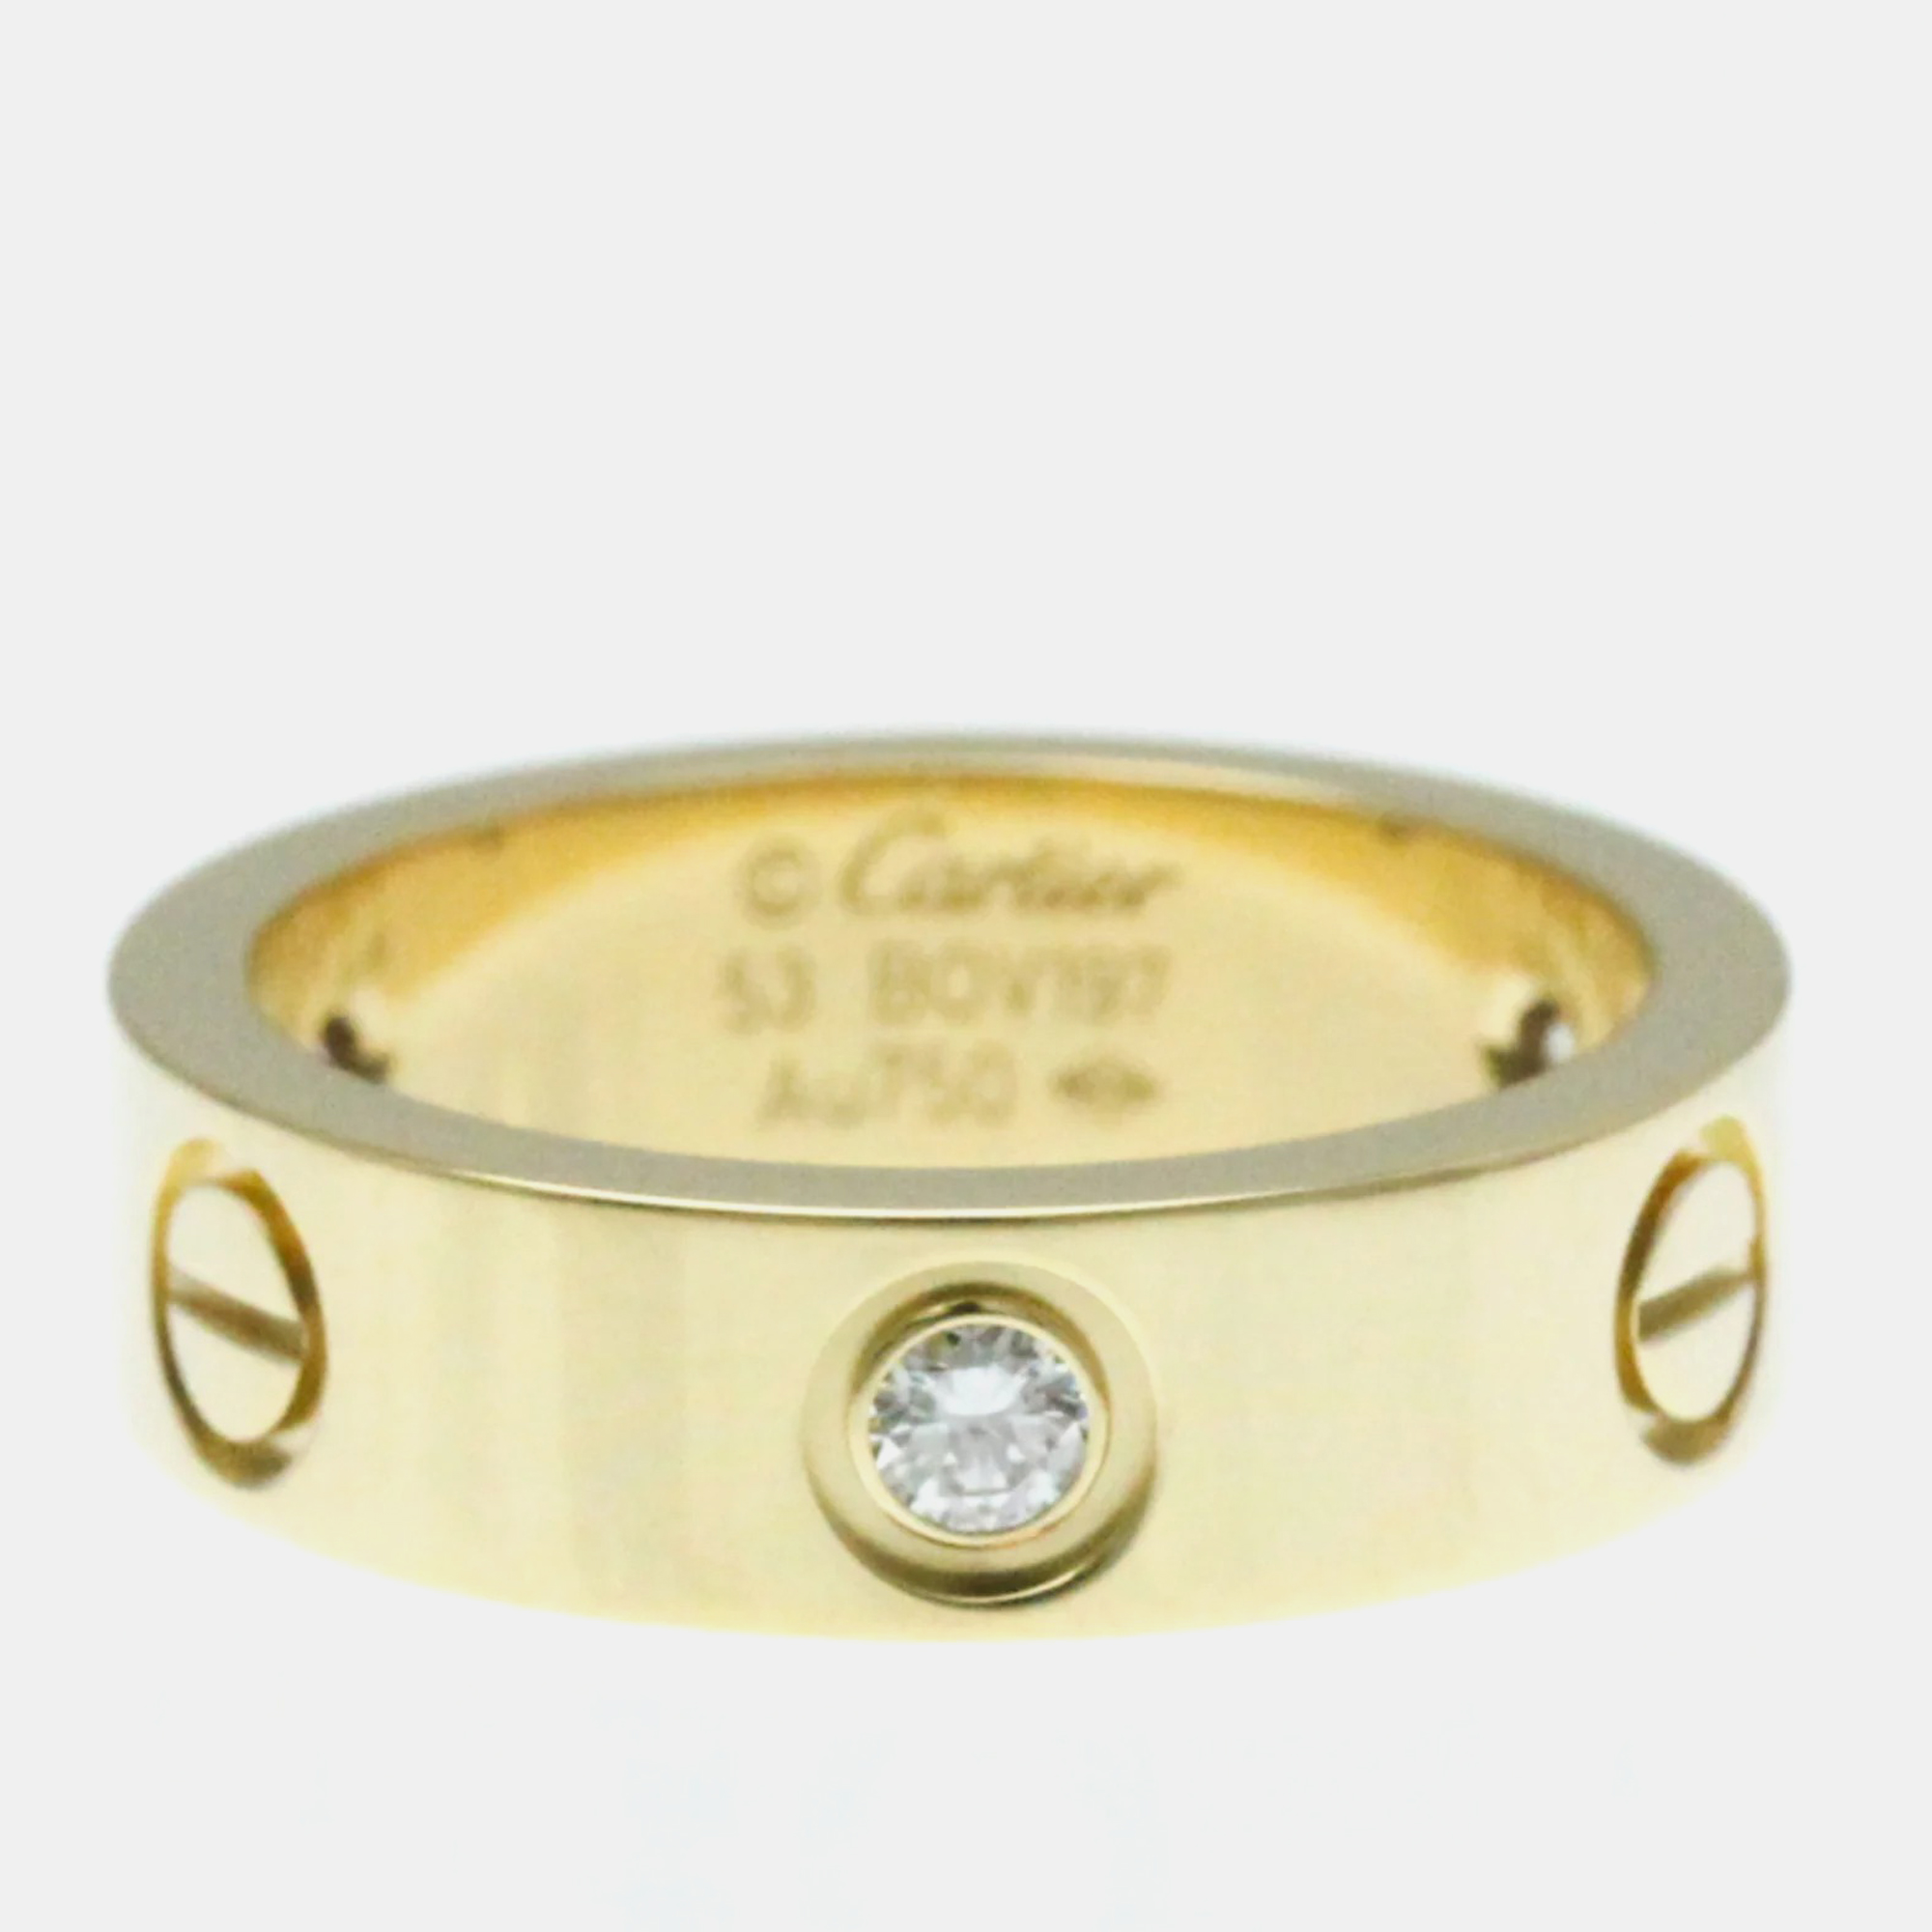 Cartier 18k yellow gold and diamond love band ring eu 53